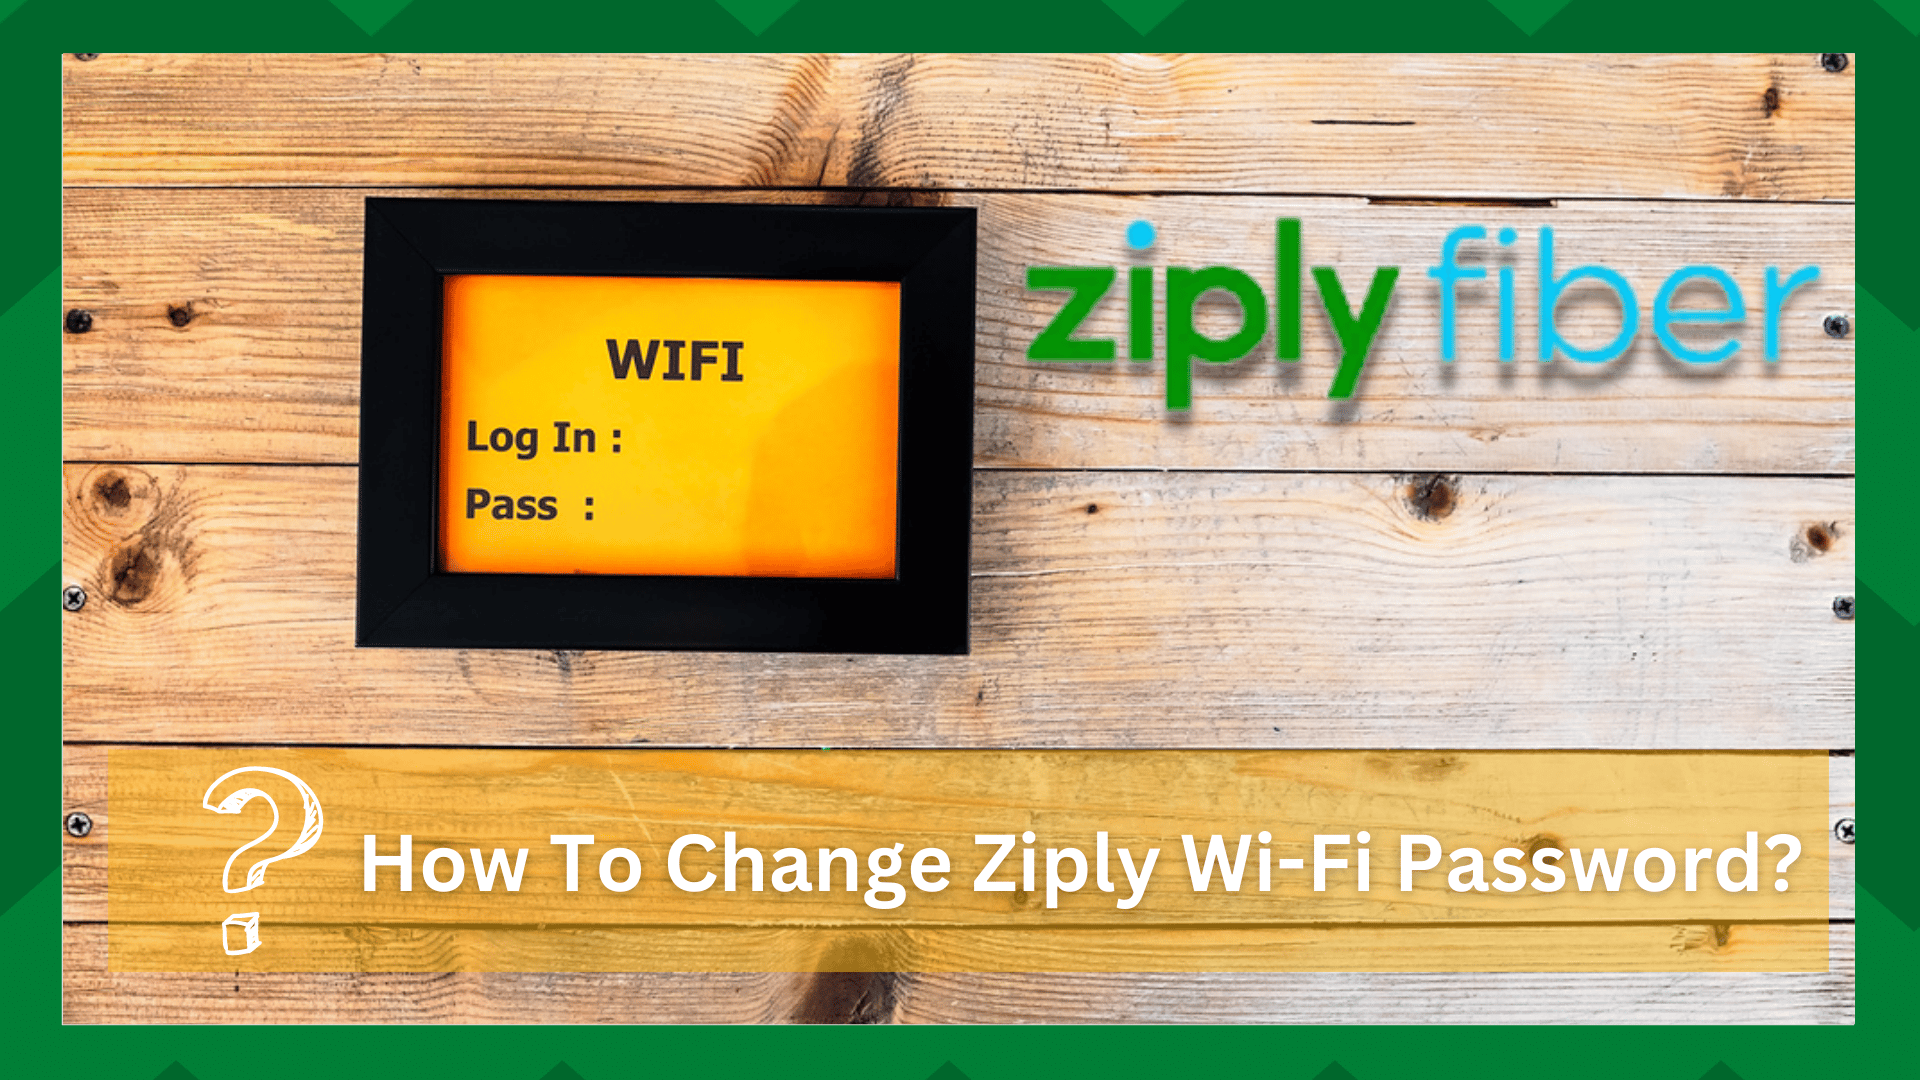 How To Change Ziply Wi-Fi Password